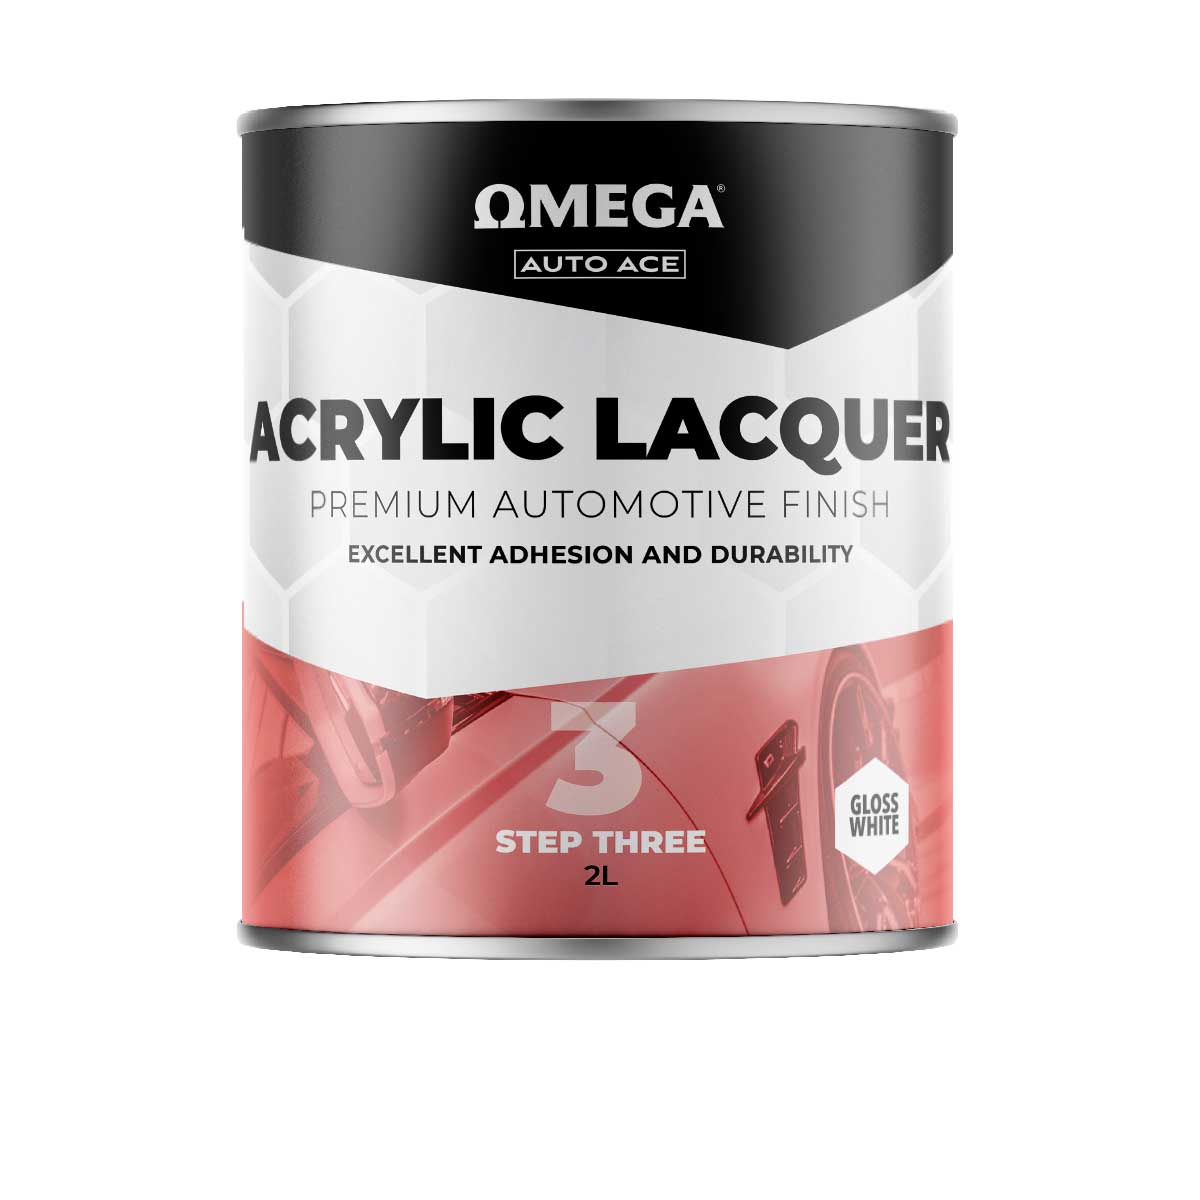 Omega Auto Ace Acrylic Lacquer Gloss White 2lt